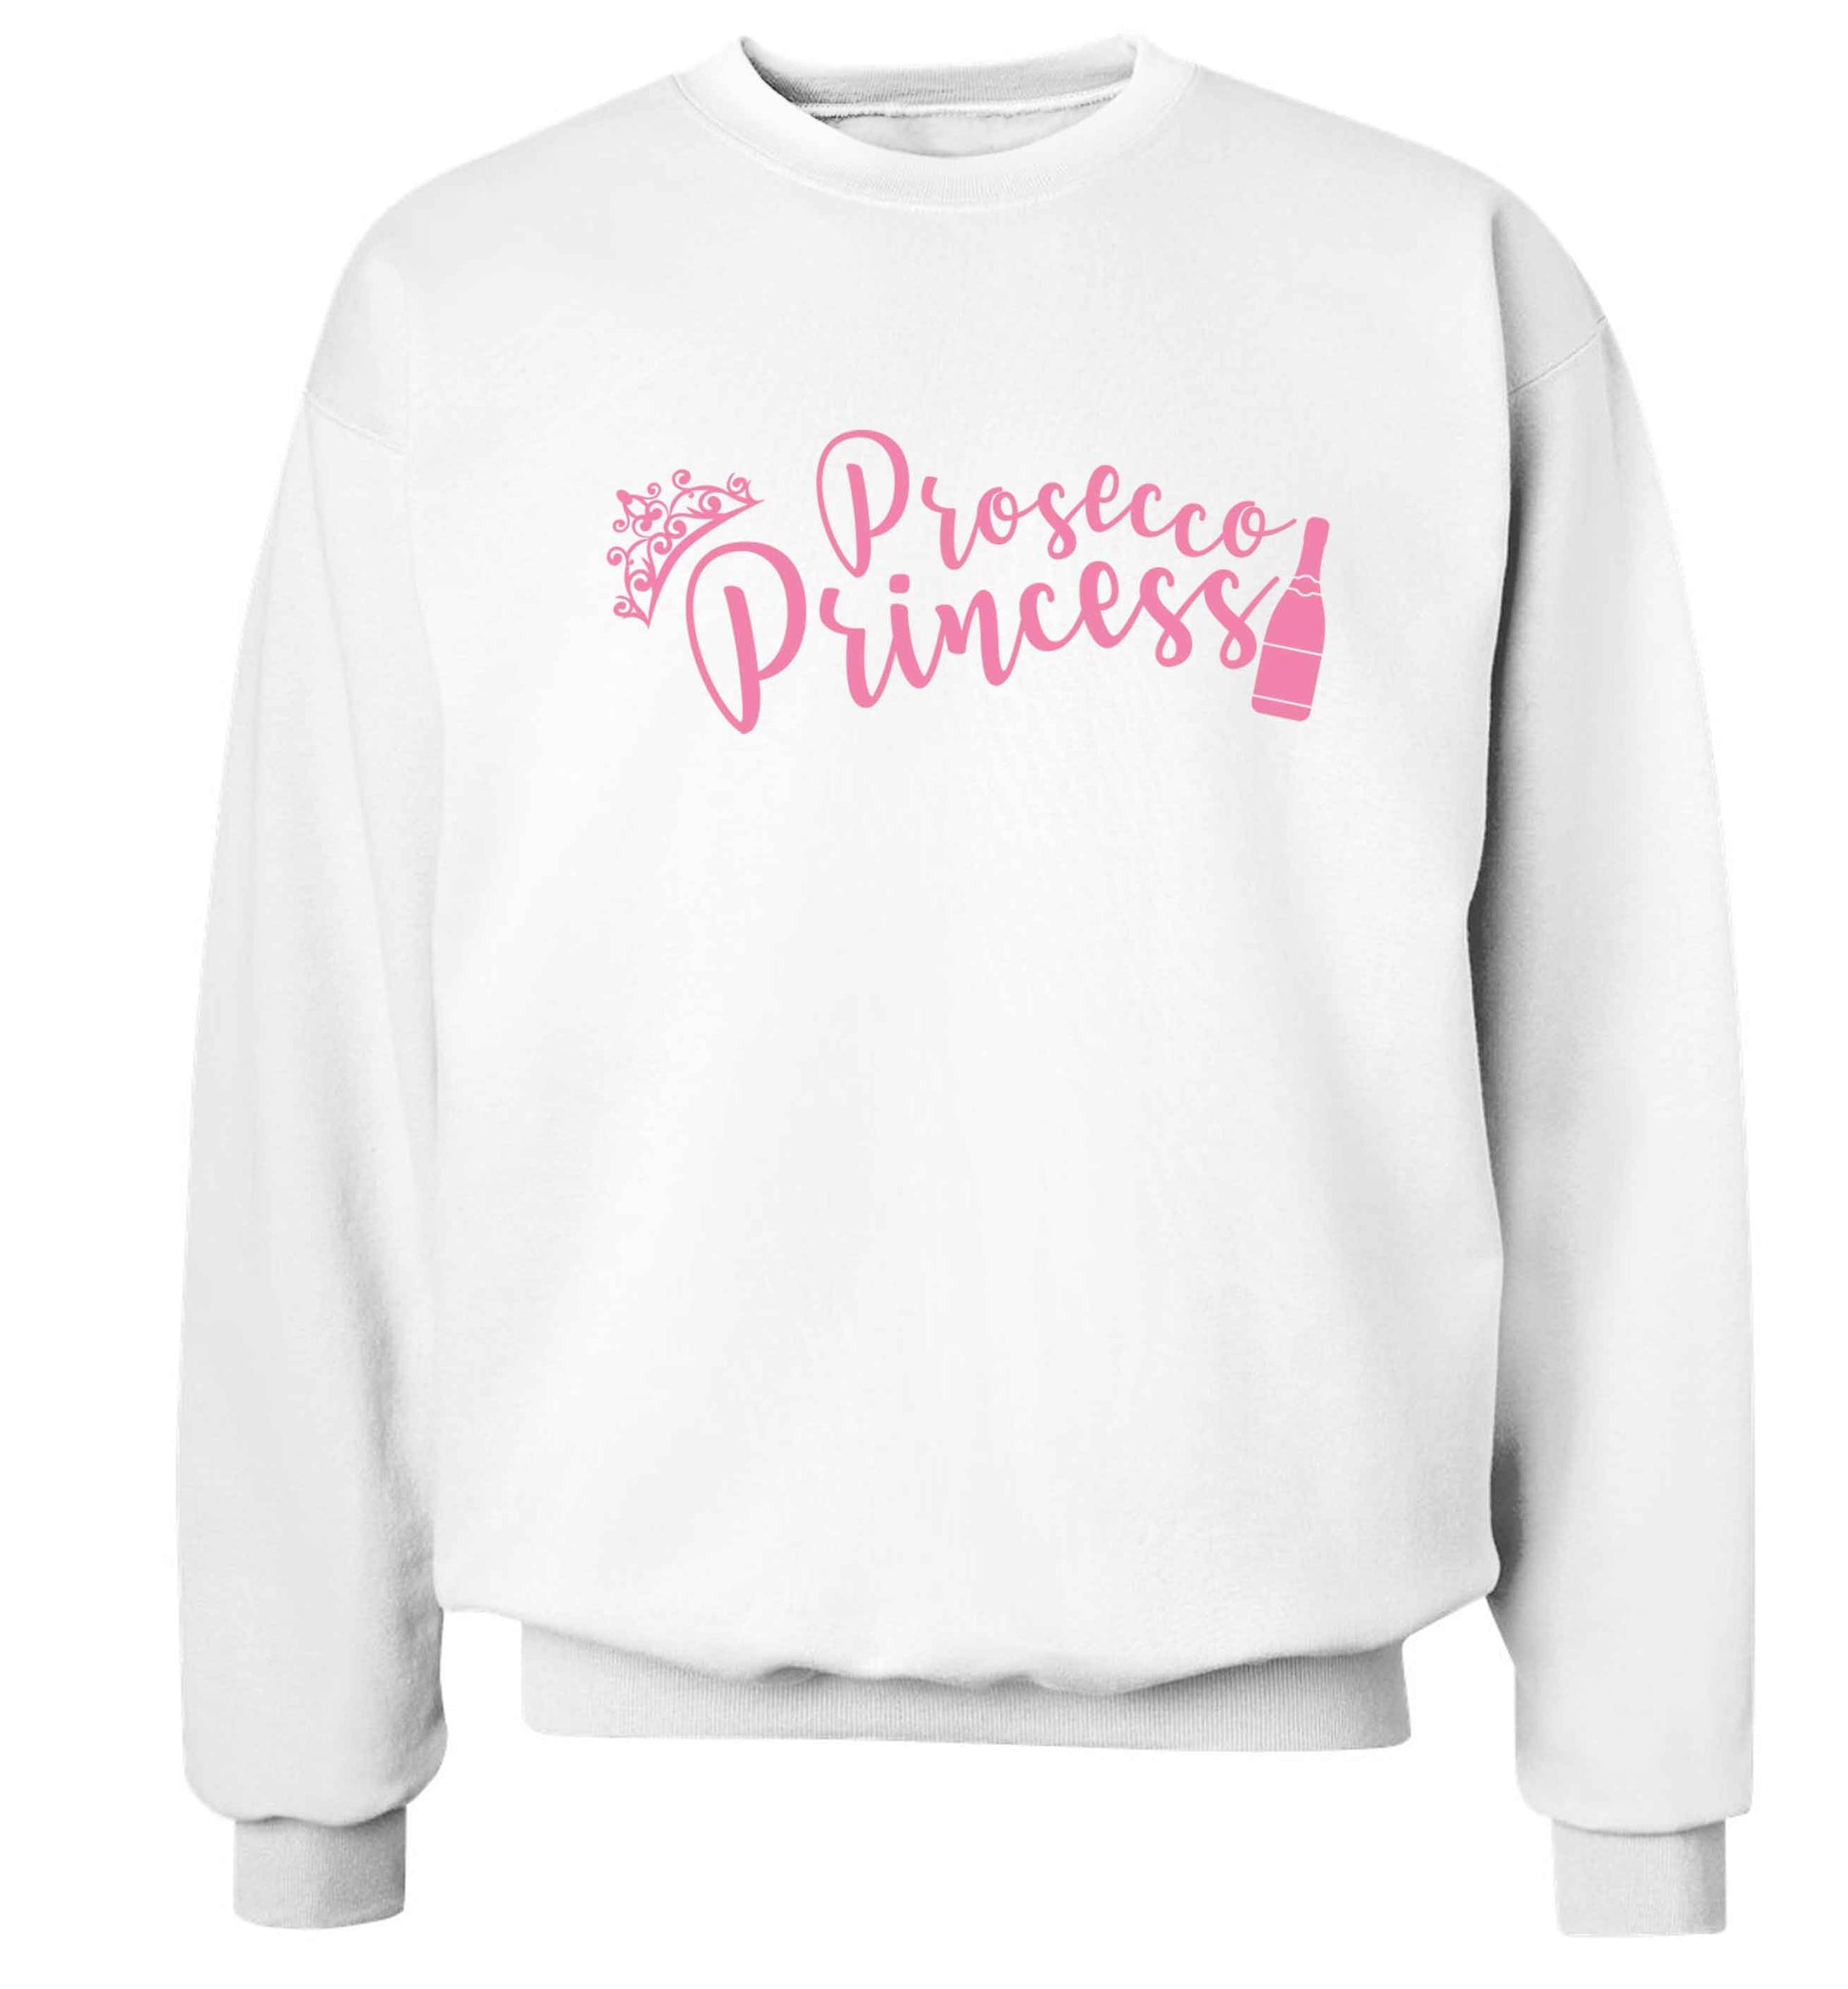 Prosecco princess Adult's unisex white Sweater 2XL